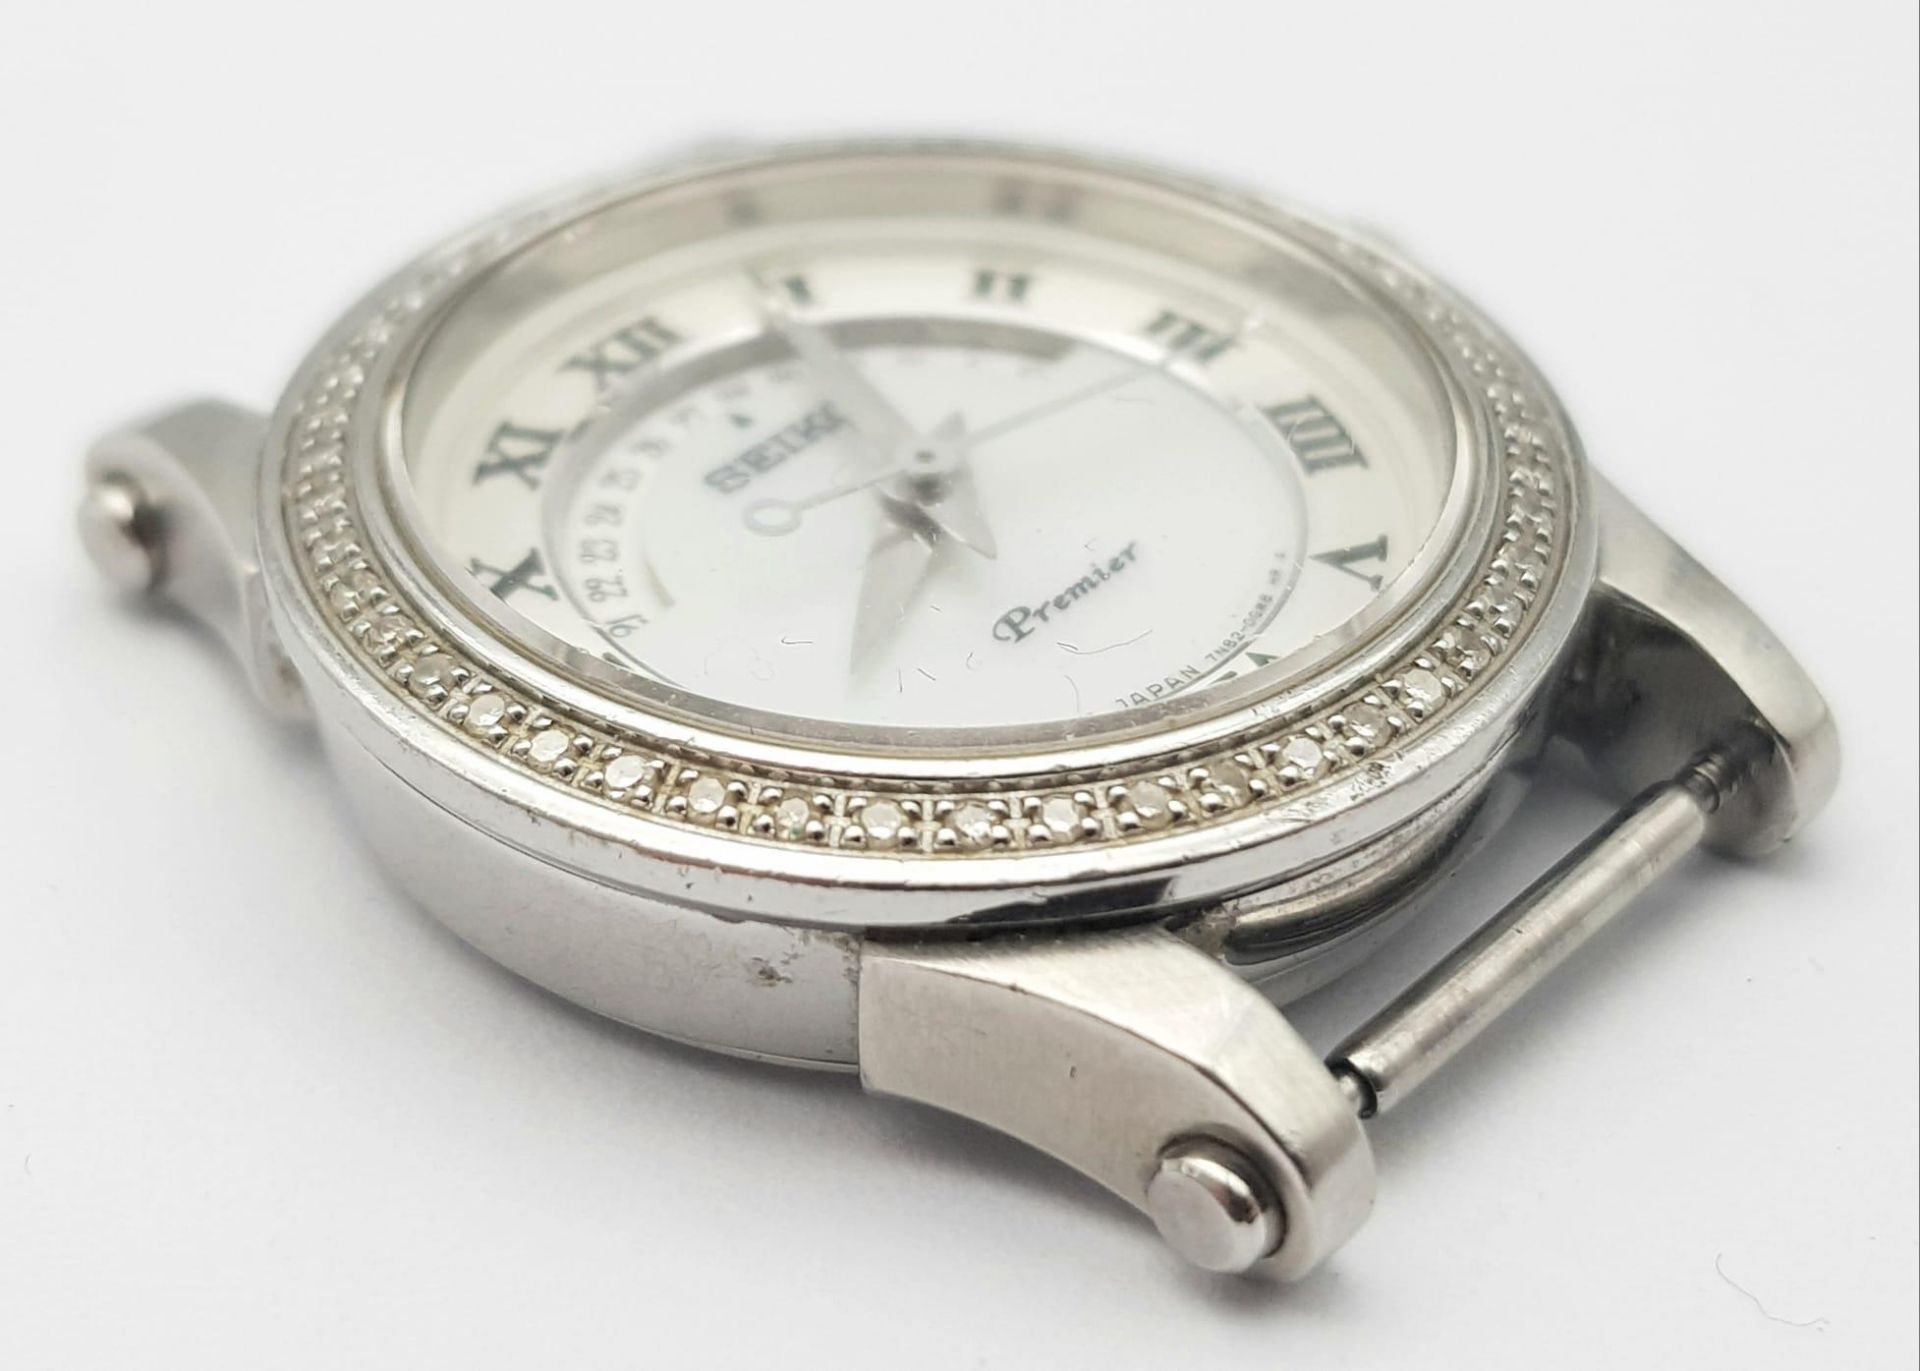 A Seiko Premier Ladies Diamond Watch Case. 27mm. Diamond bezel. Mother of pearl dial. In working - Bild 2 aus 8